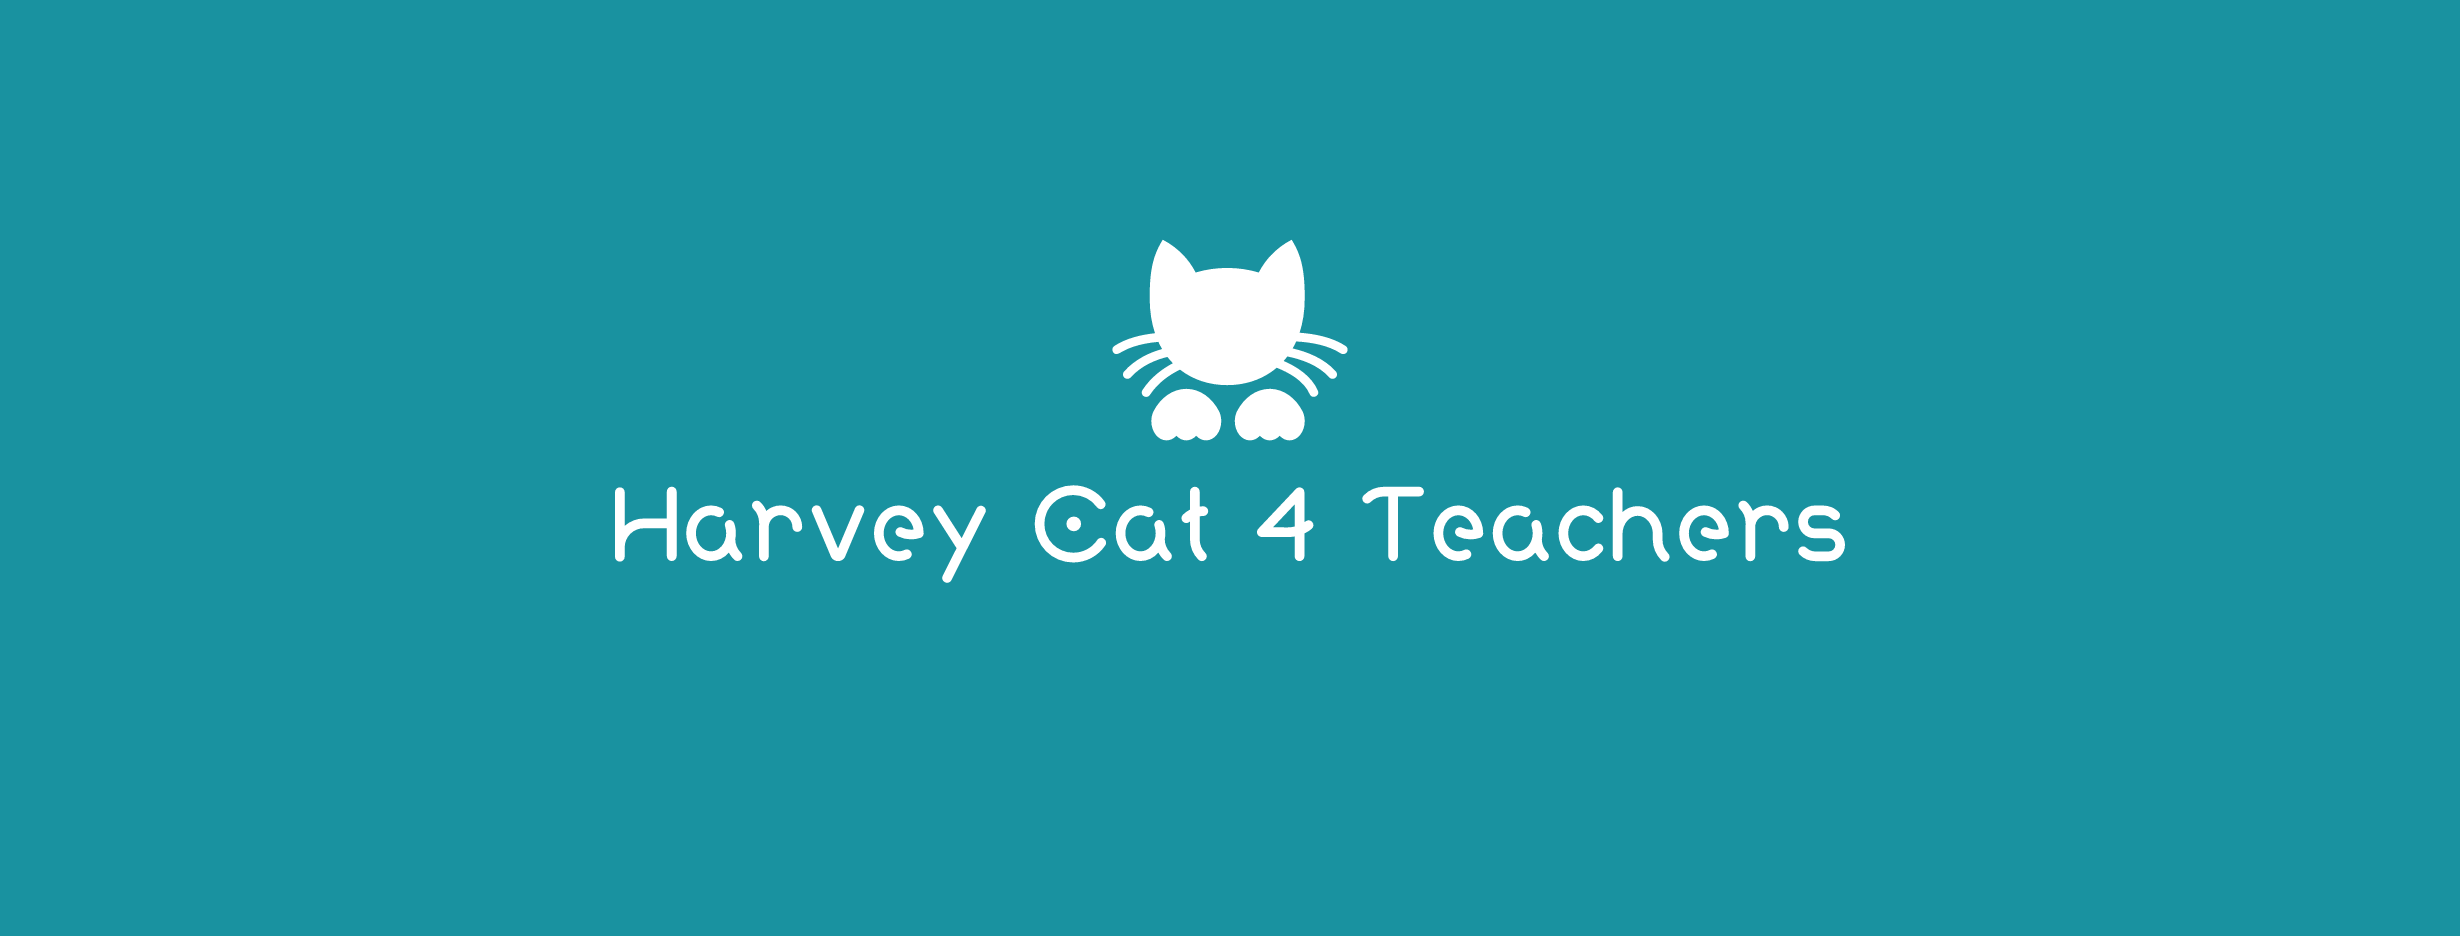 Harvey Cat 4 Teachers logo